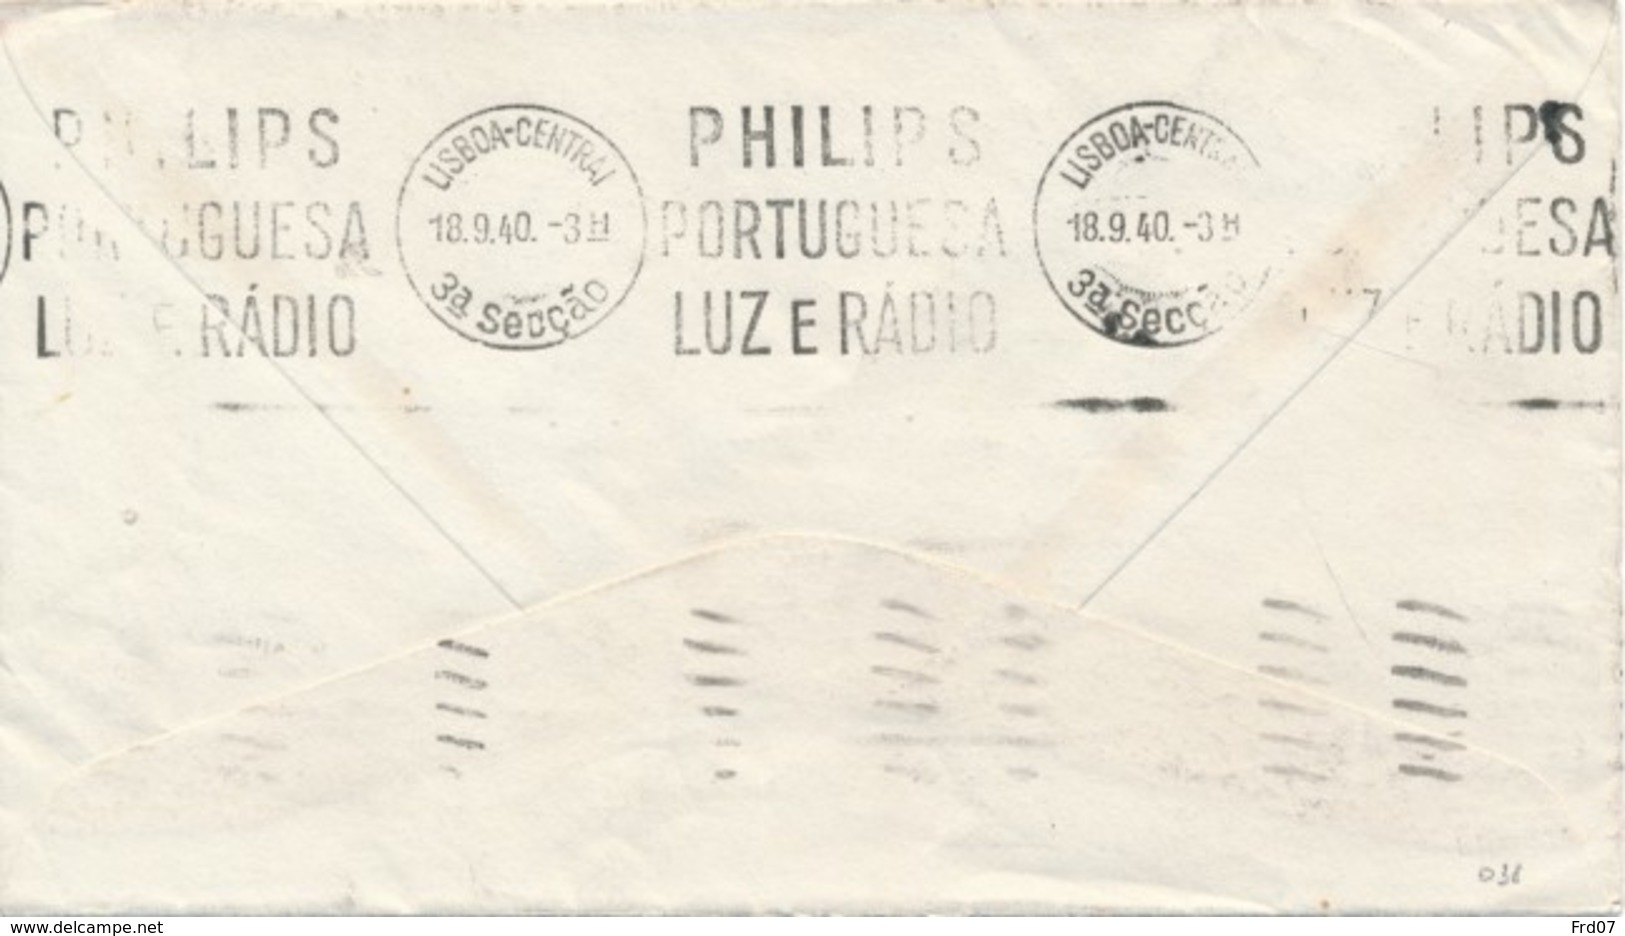 Par Avion - By Air Mail - USA Springfield Tenn. Sep 7 1940 Vers La Suisse Via Lissabon 18.9.40 / Philips Radio - 2c. 1941-1960 Brieven